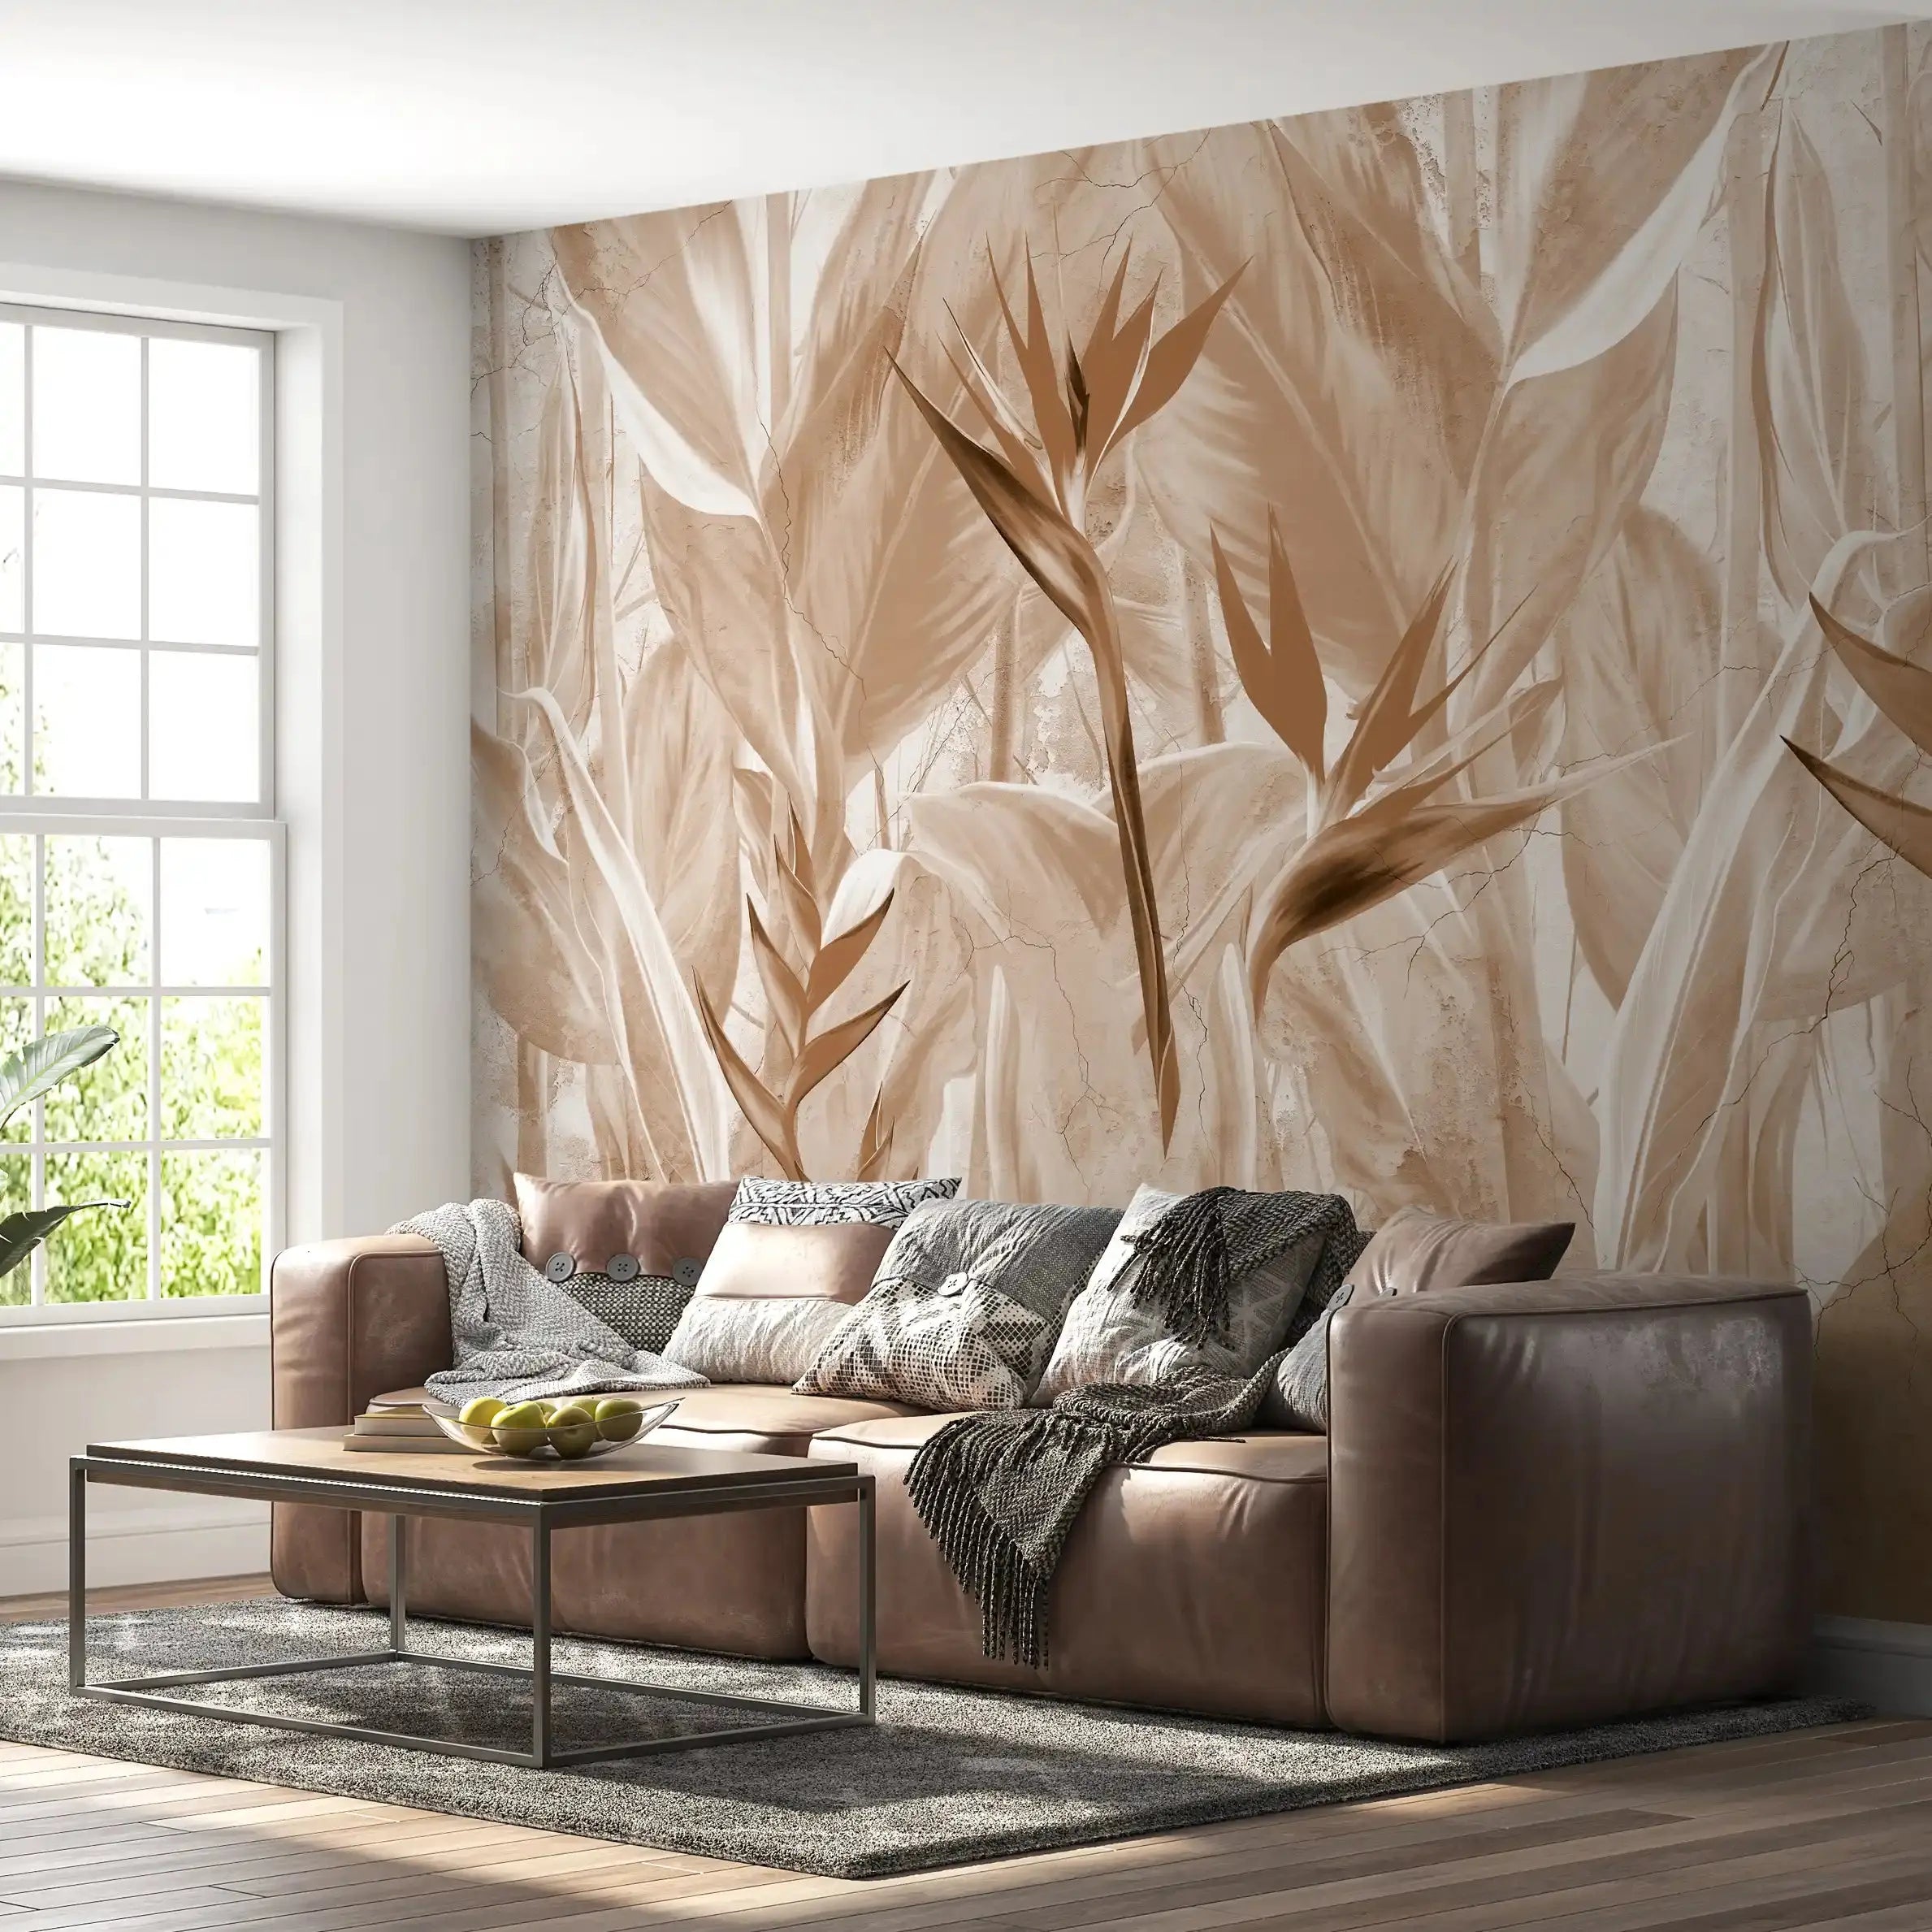 3006-D / Peel and Stick Botanical Wallpaper - Bird of Paradise Design, Easy Install Wall Mural - Artevella